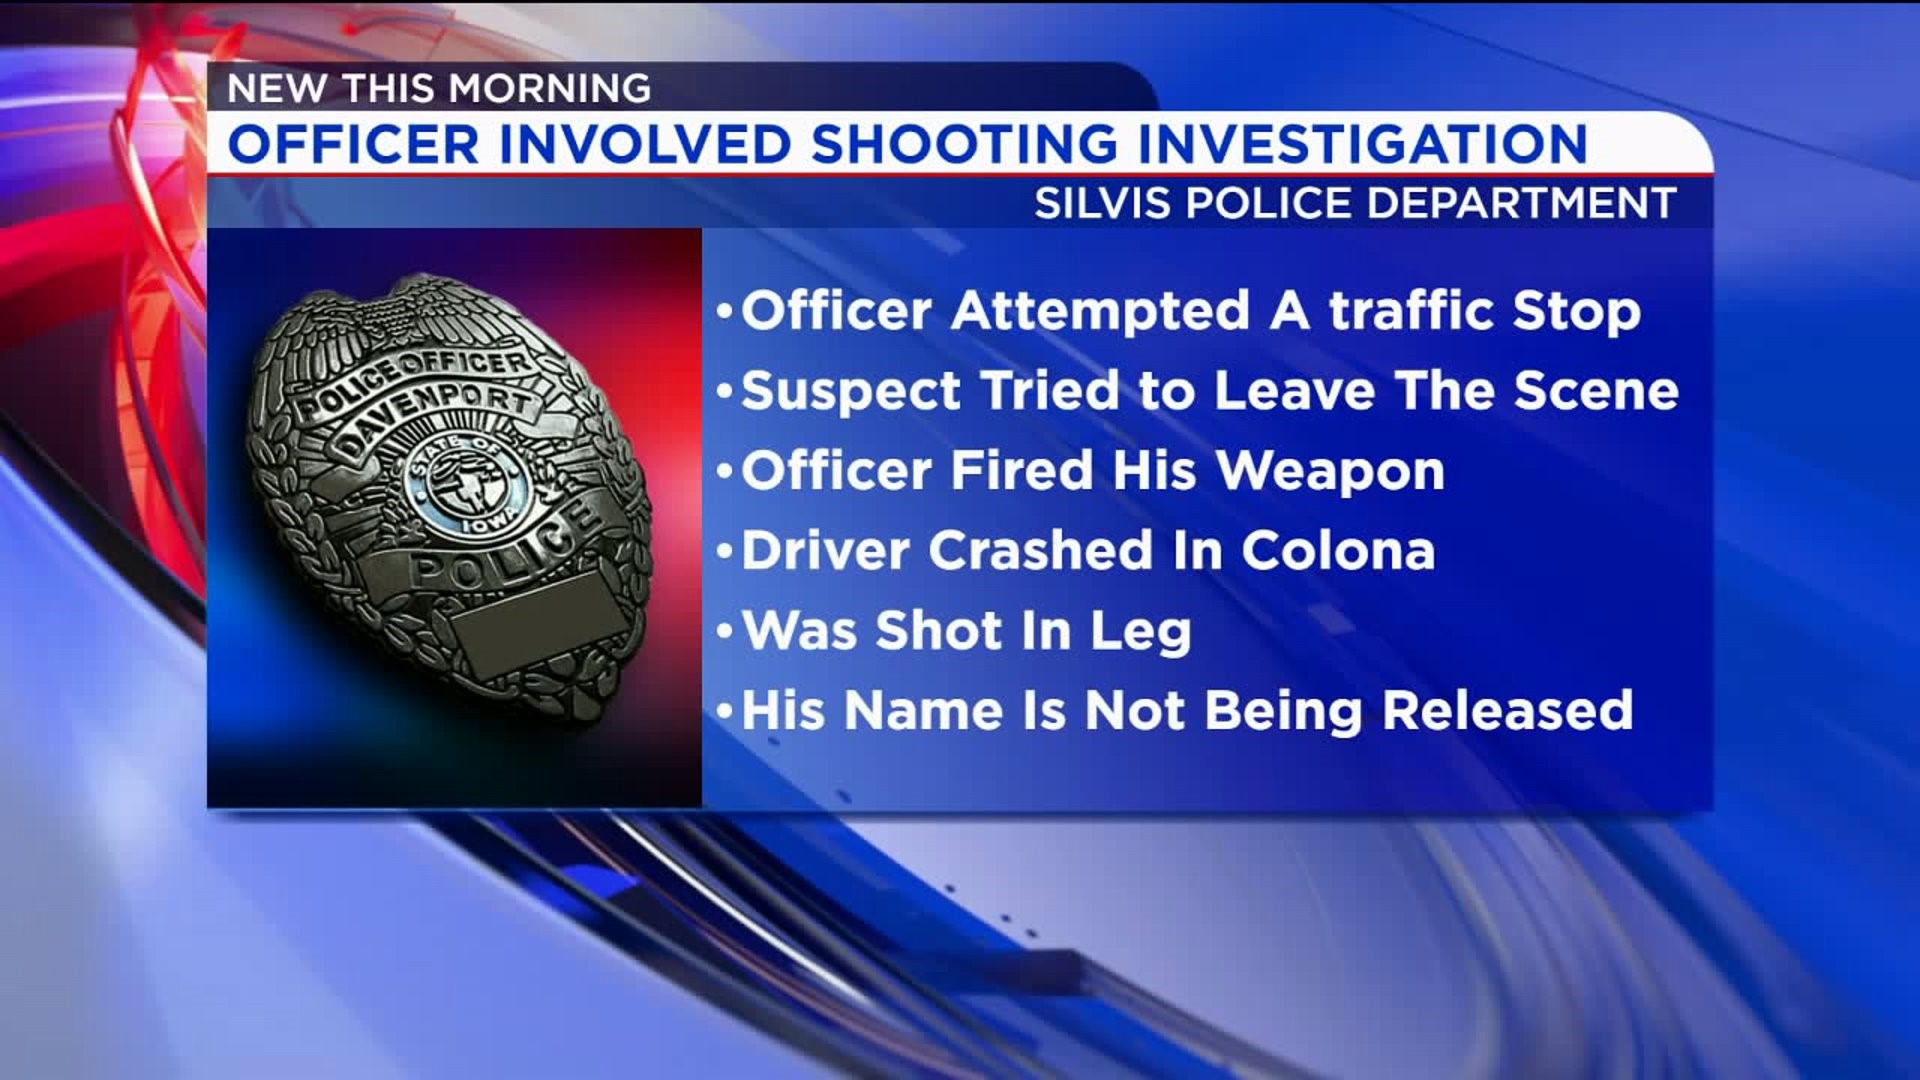 Sunday night officer involved shooting in Silvis